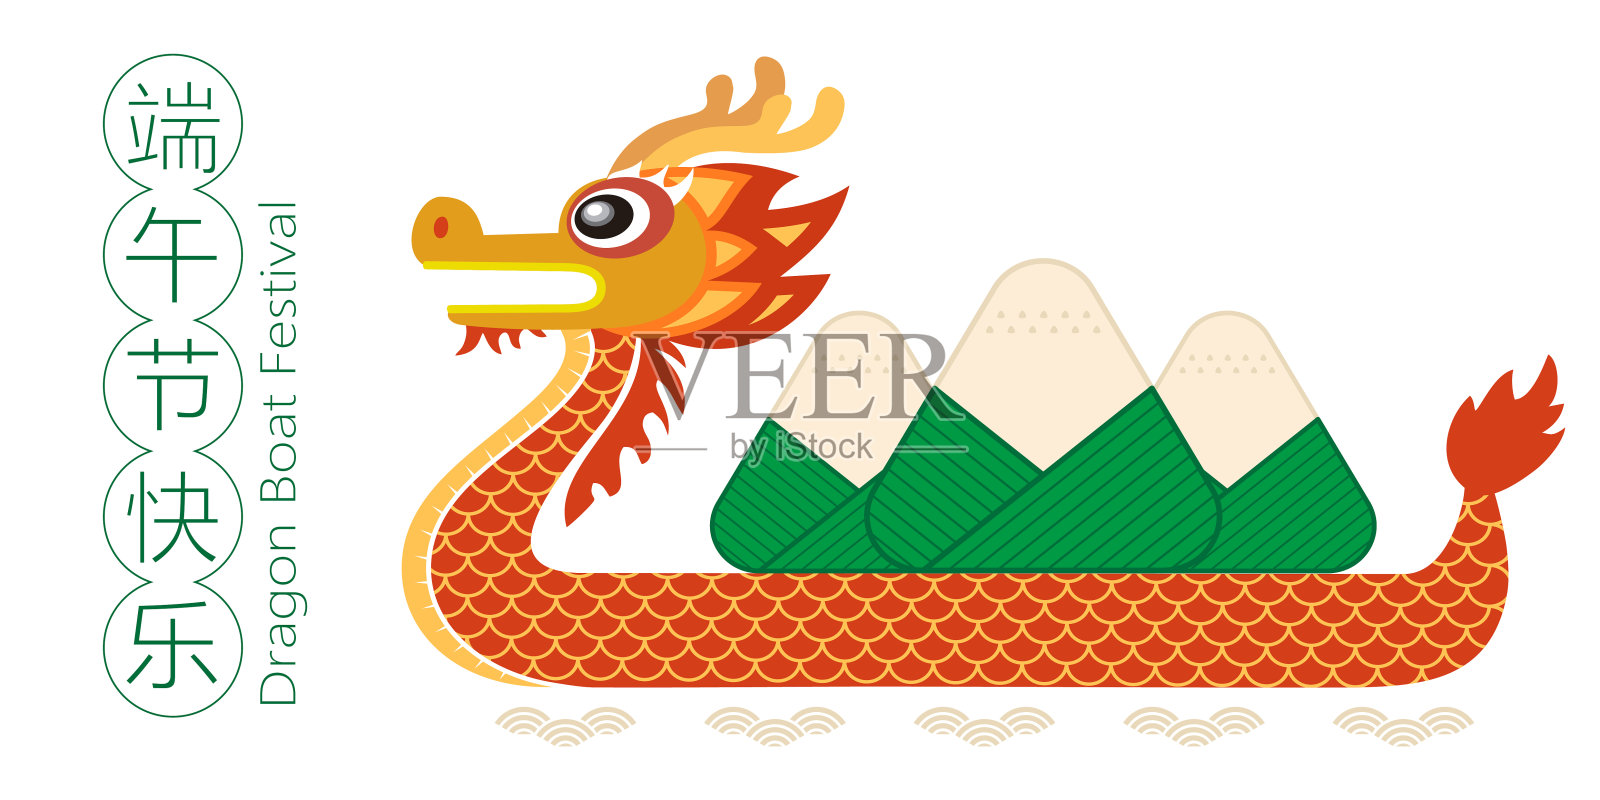 Chinese traditional festival - Dragon Boat Festival illustration, dragon boat and rice dumpling illustration设计模板素材